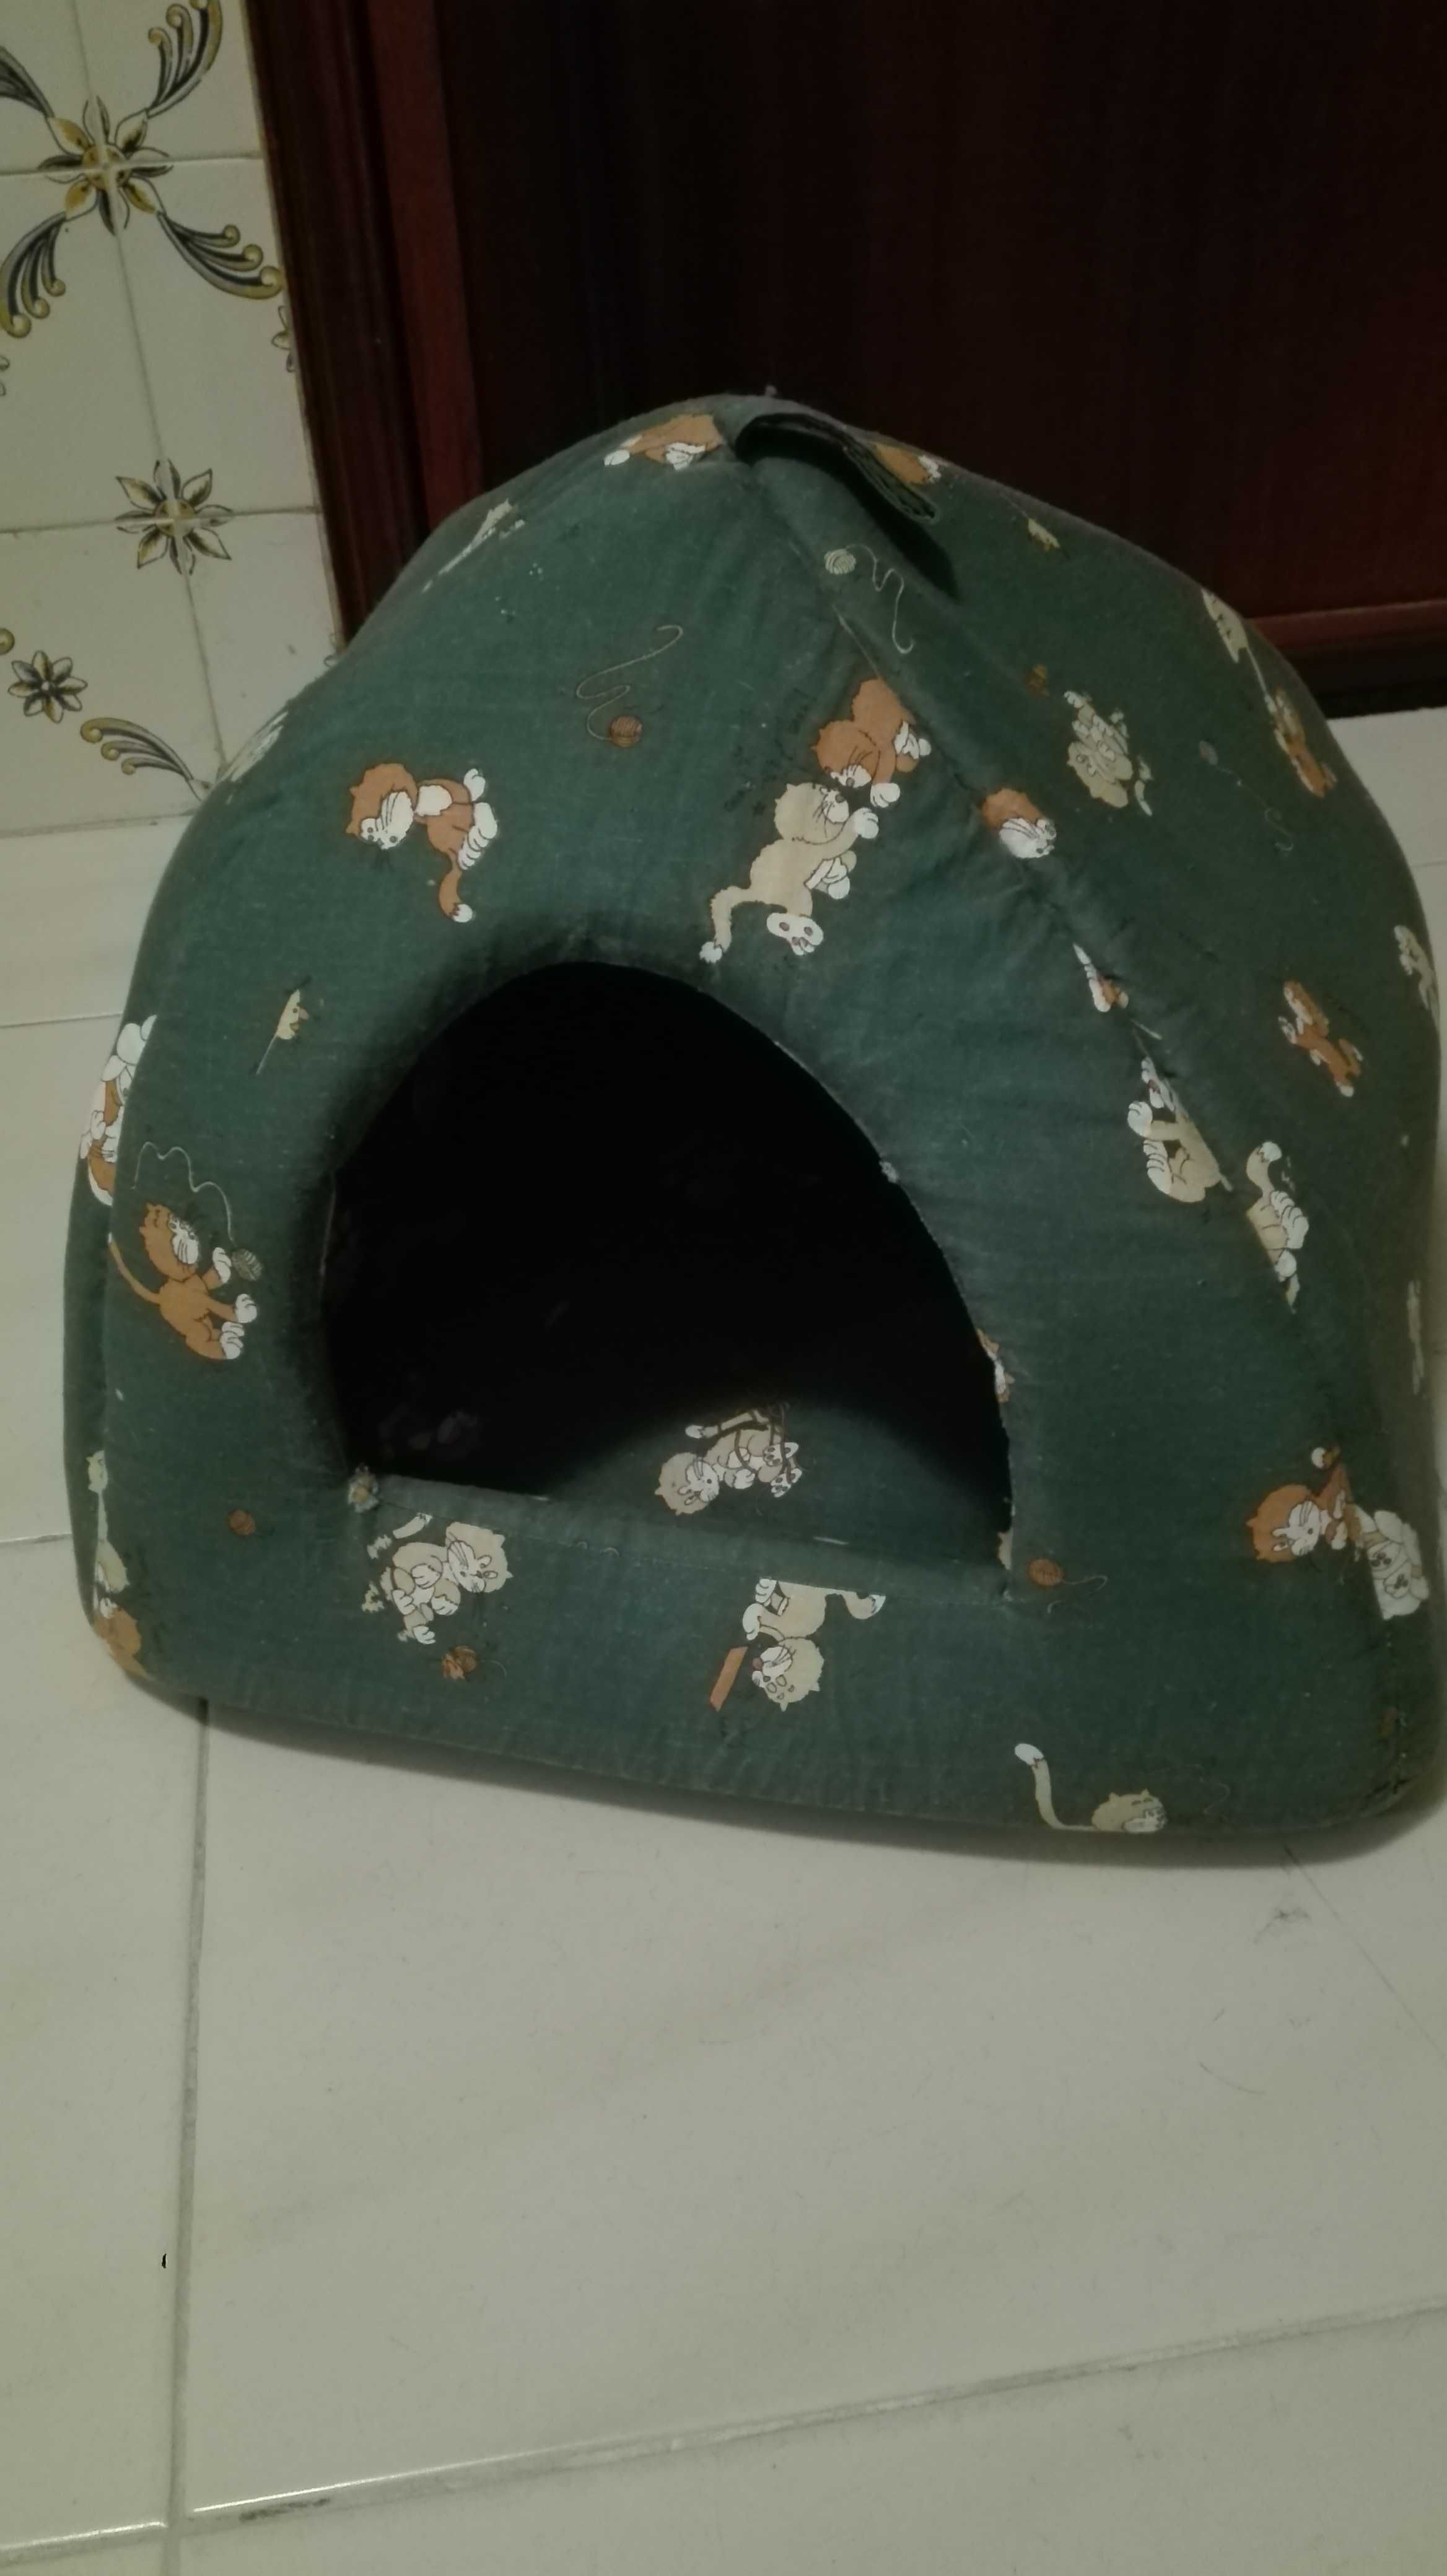 cama iglo para gato